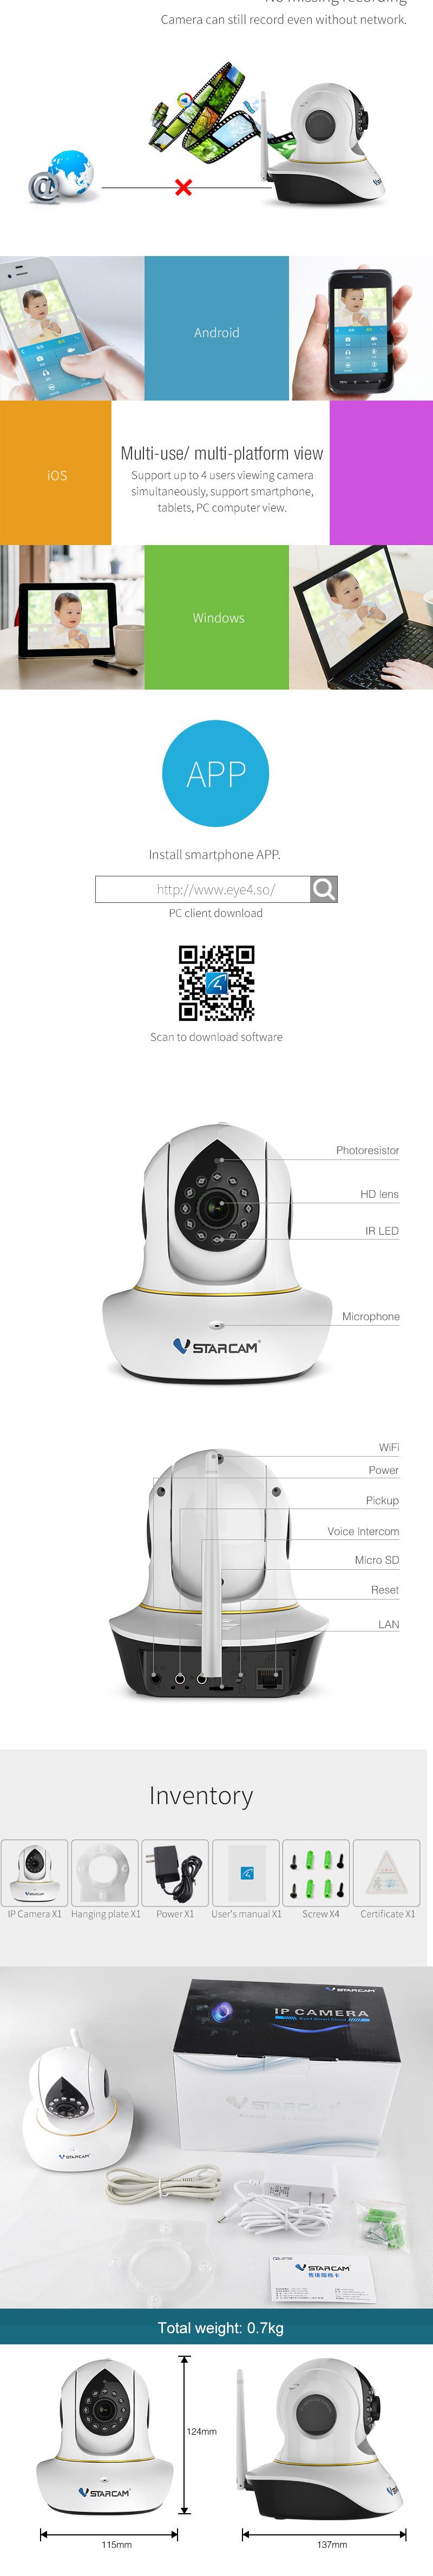 Vstarcam-C38S-1080P-Full-HD-Wireless-IP-Camera-wifi-Camera-Night-Vision-2-MegaPixel-Security-Interne-1462618